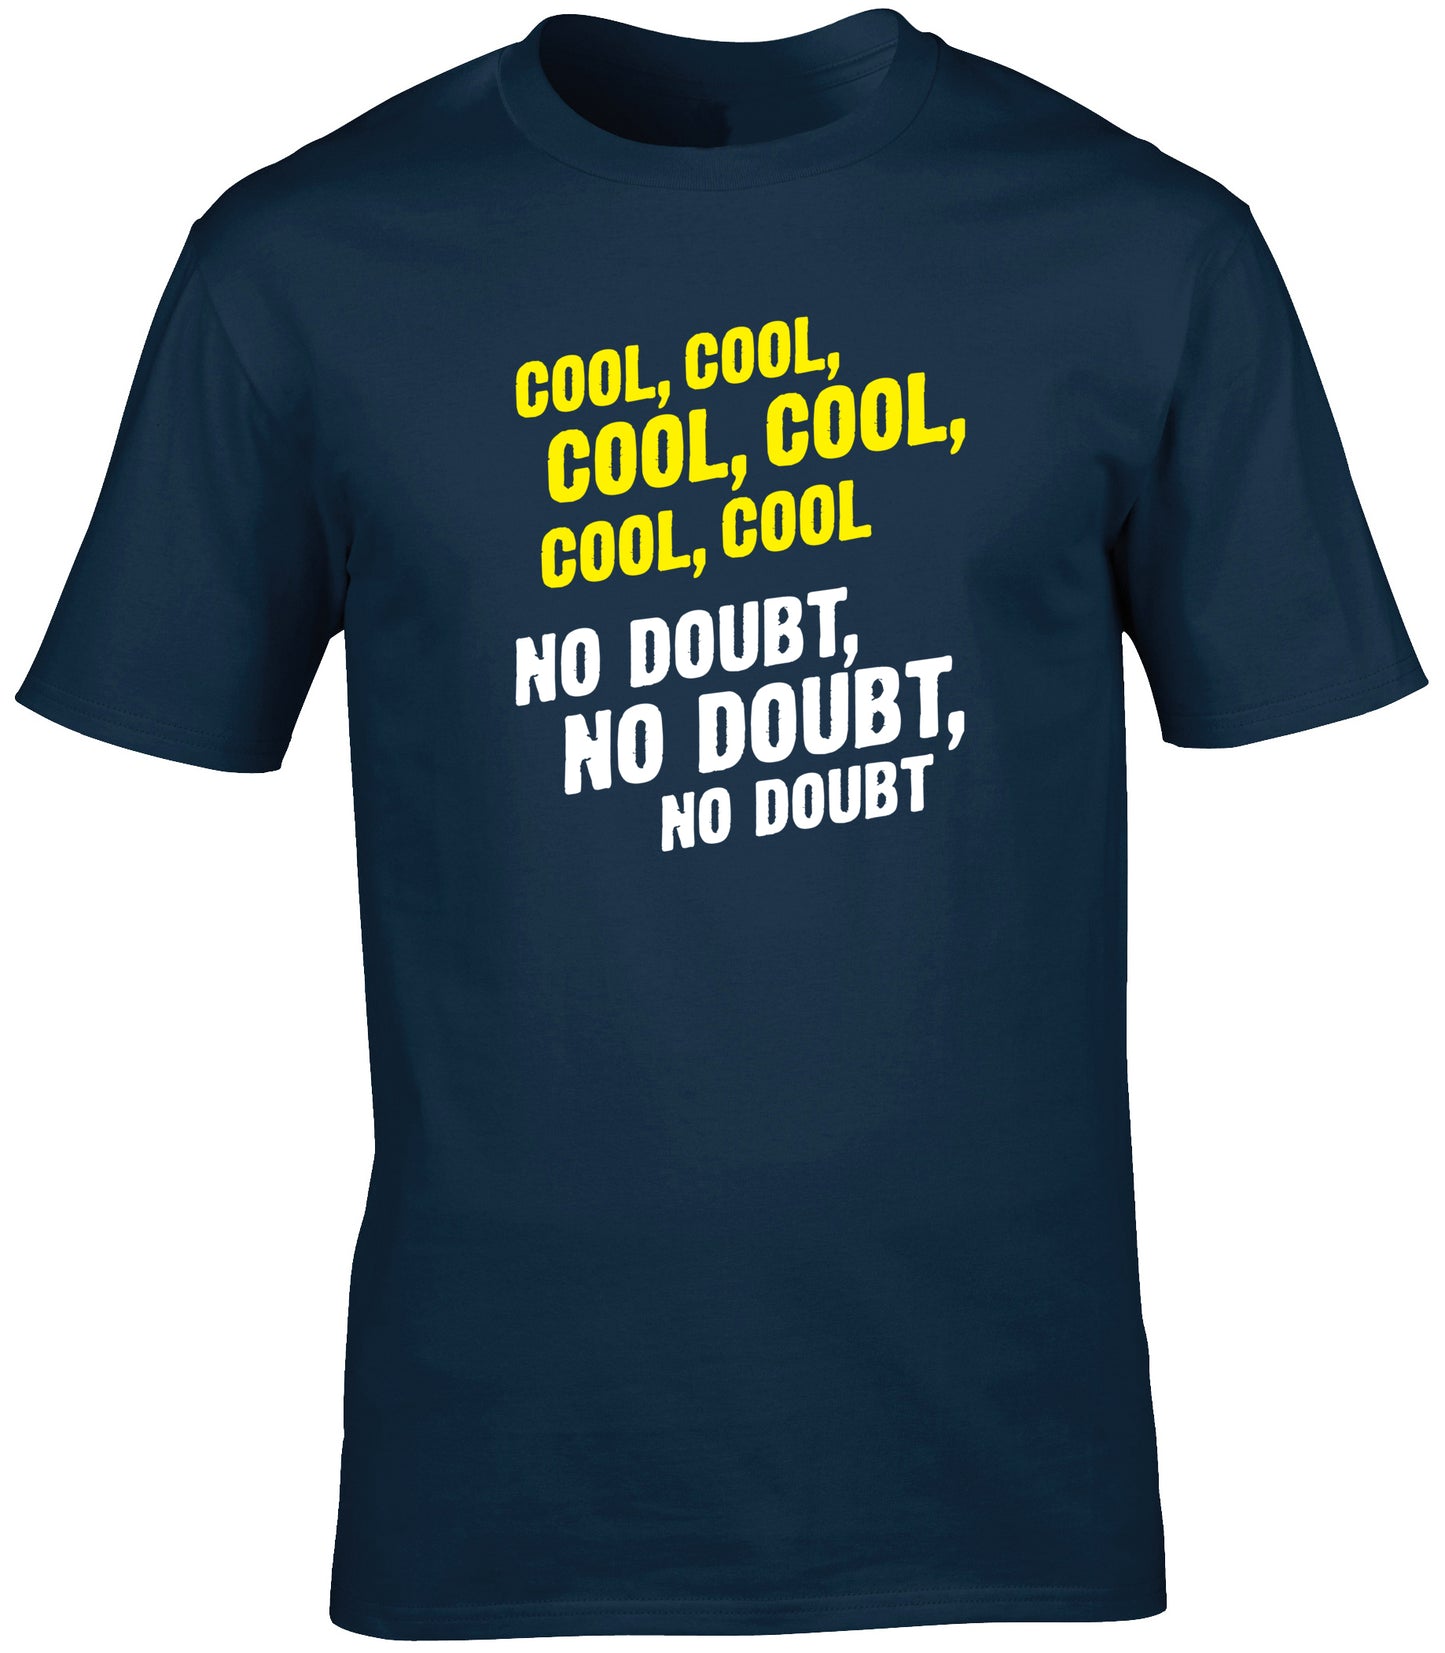 Cool, cool, cool, cool, cool. No doubt, no doubt, no doubt. unisex t-shirt